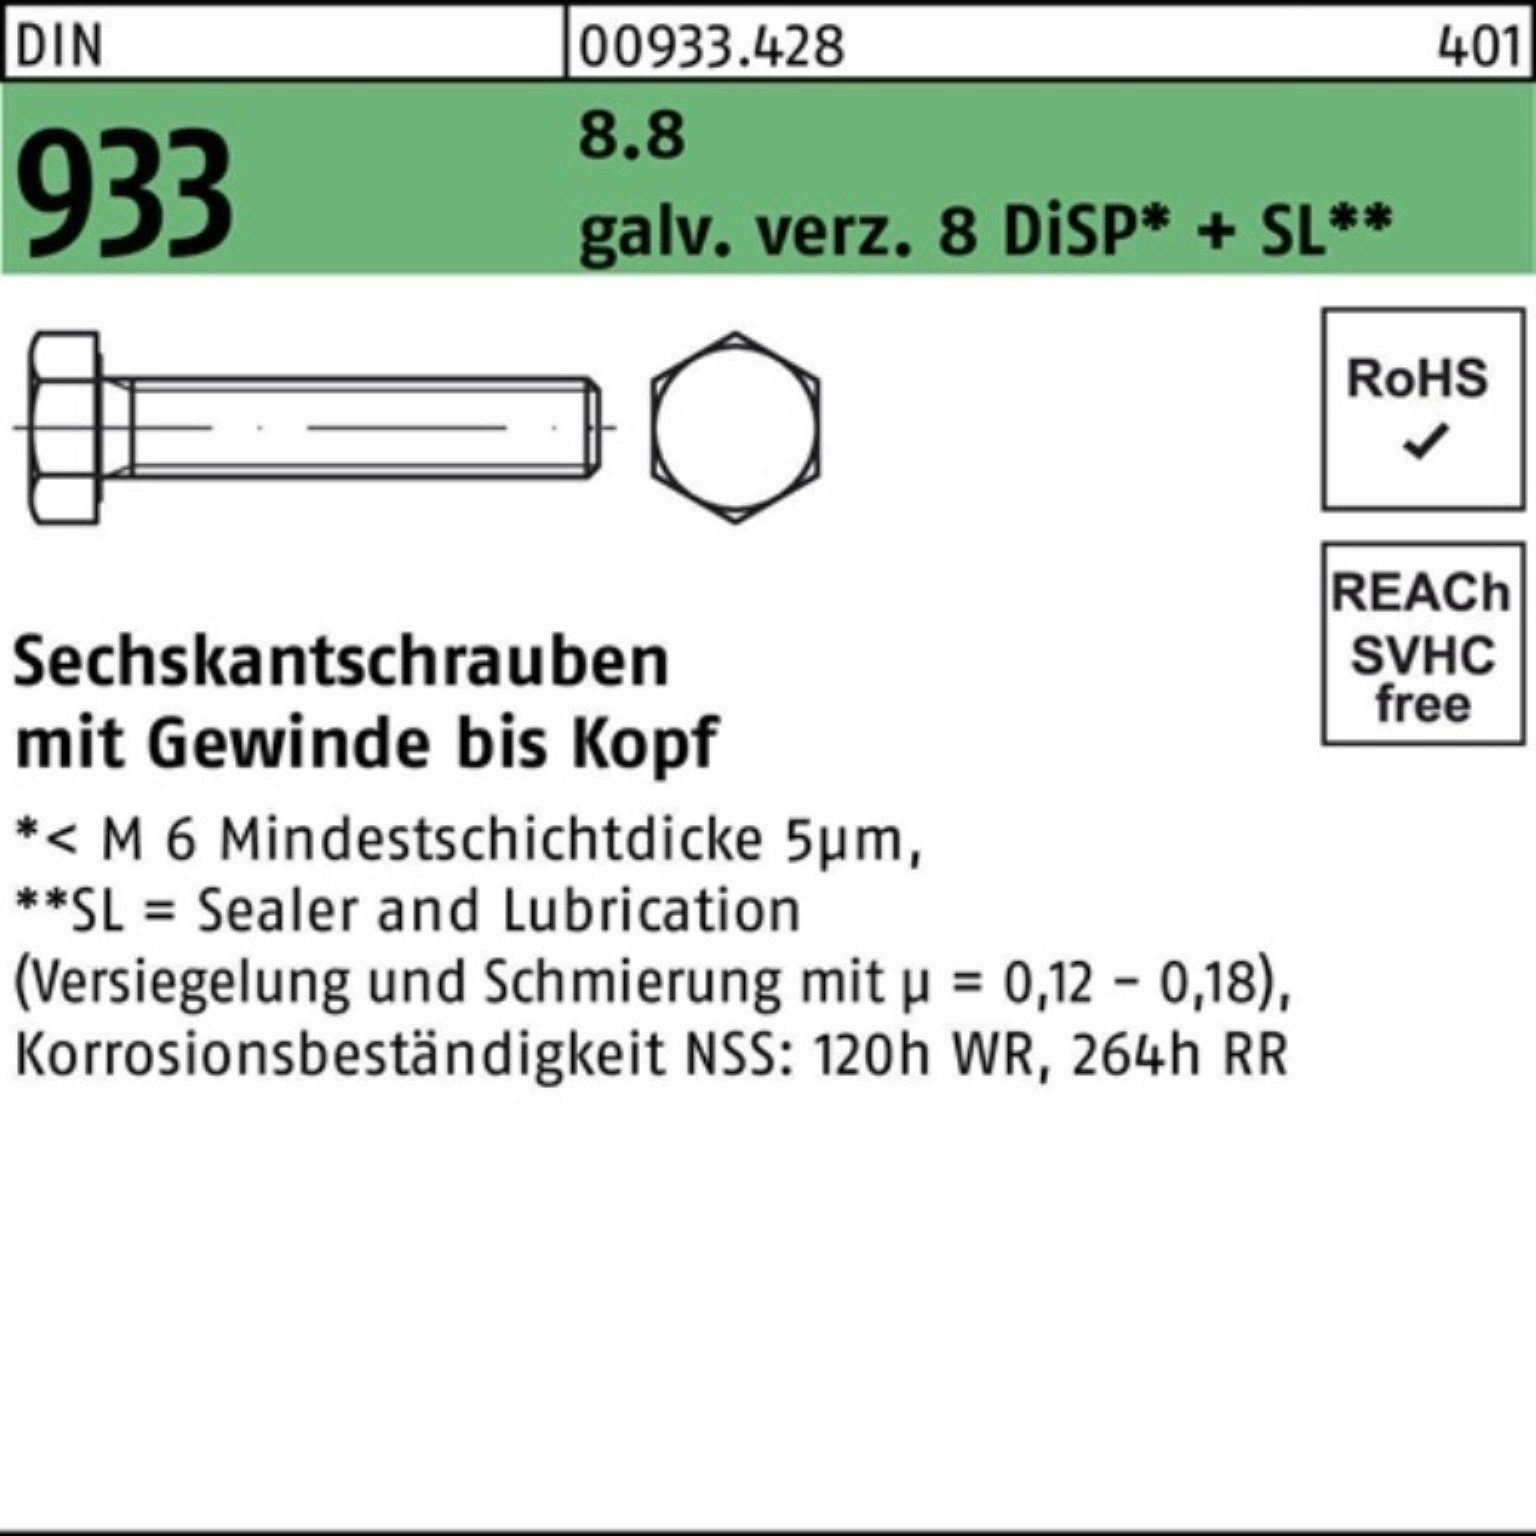 Reyher Sechskantschraube 100er Pack Sechskantschraube DIN 933 VG M16x 20 8.8 gal Zn 8 DiSP + SL